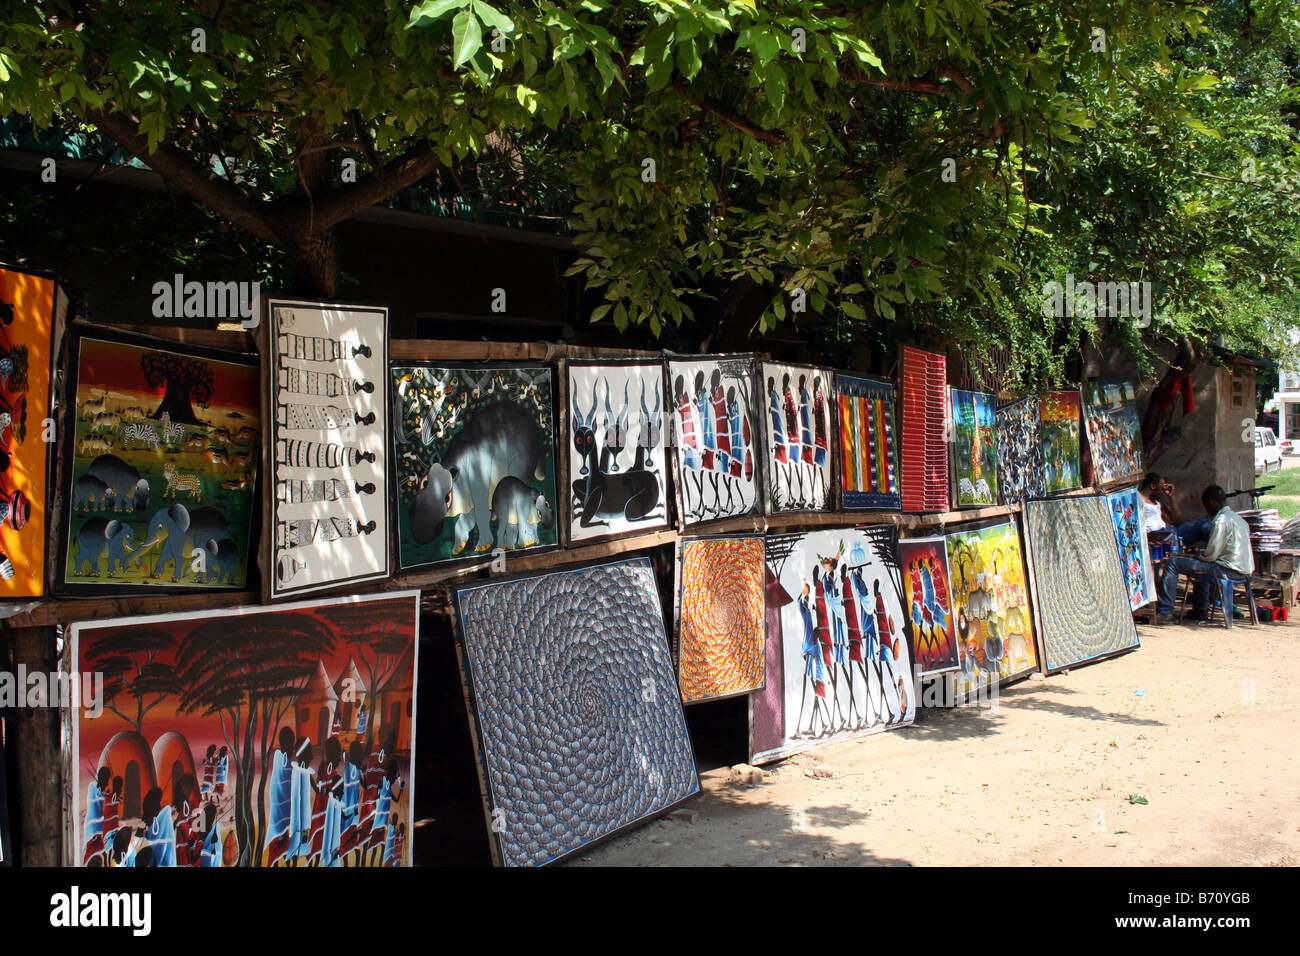 Marché de l'artisanat d'art local, Dar-es-Salaam, Tanzanie Banque D'Images